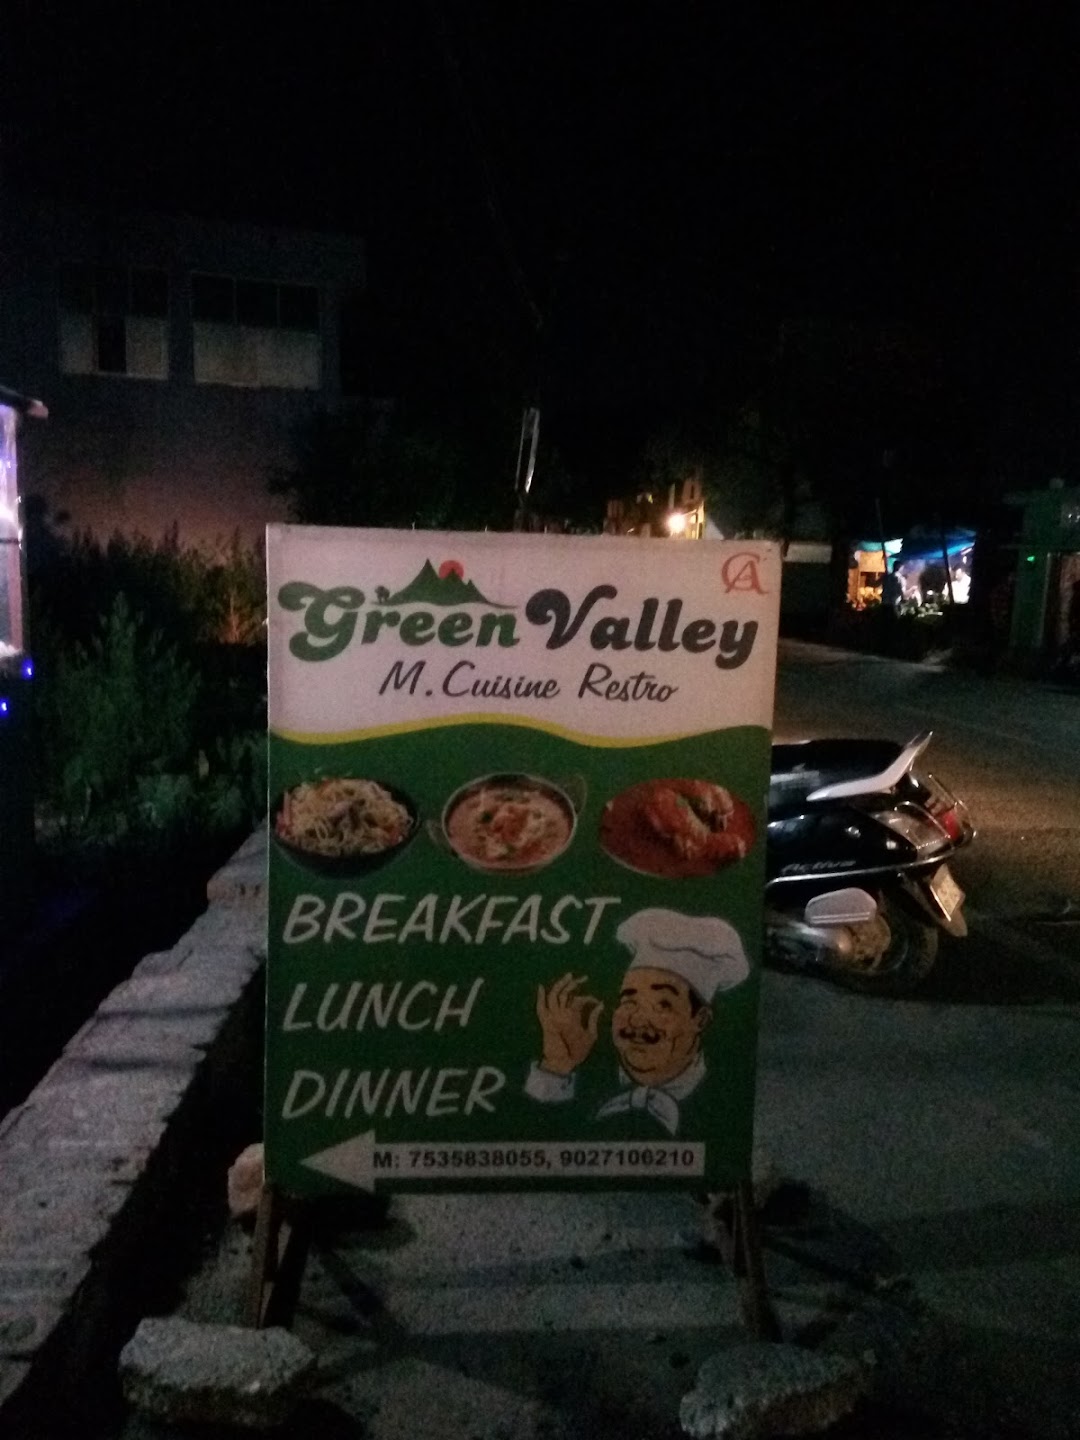 Green valley m. cuisine restro